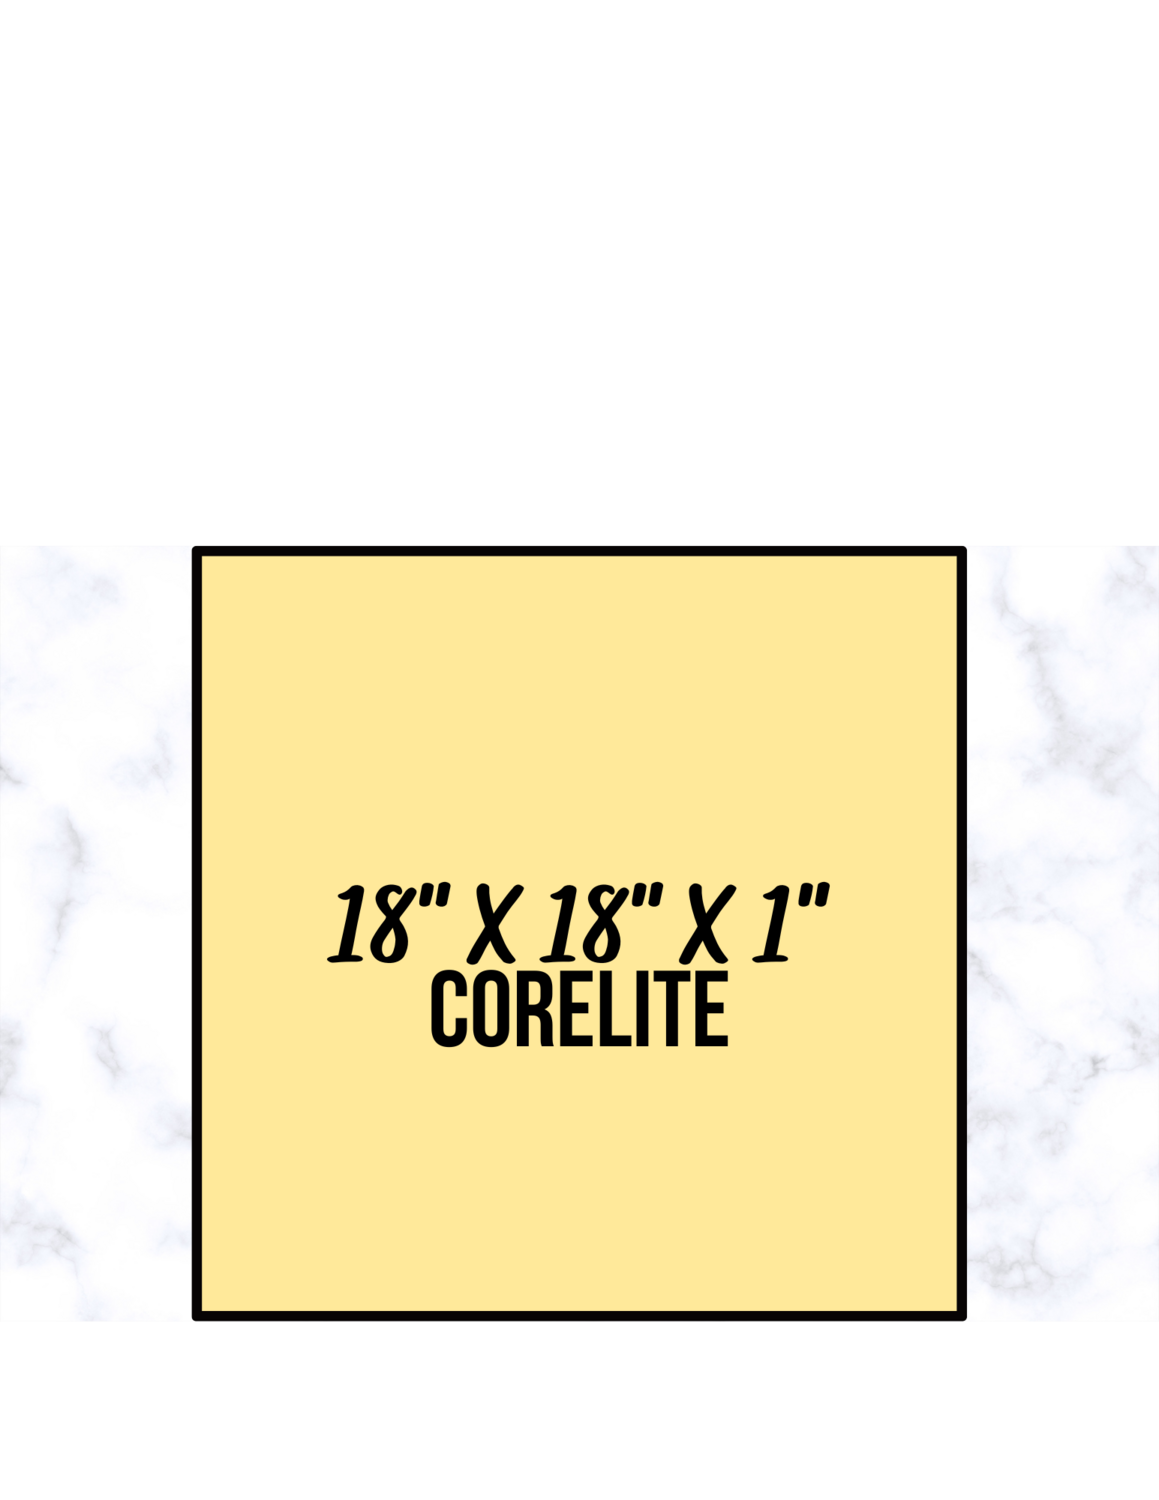 Shelf Corelite 18 x 18 x 1 sq.